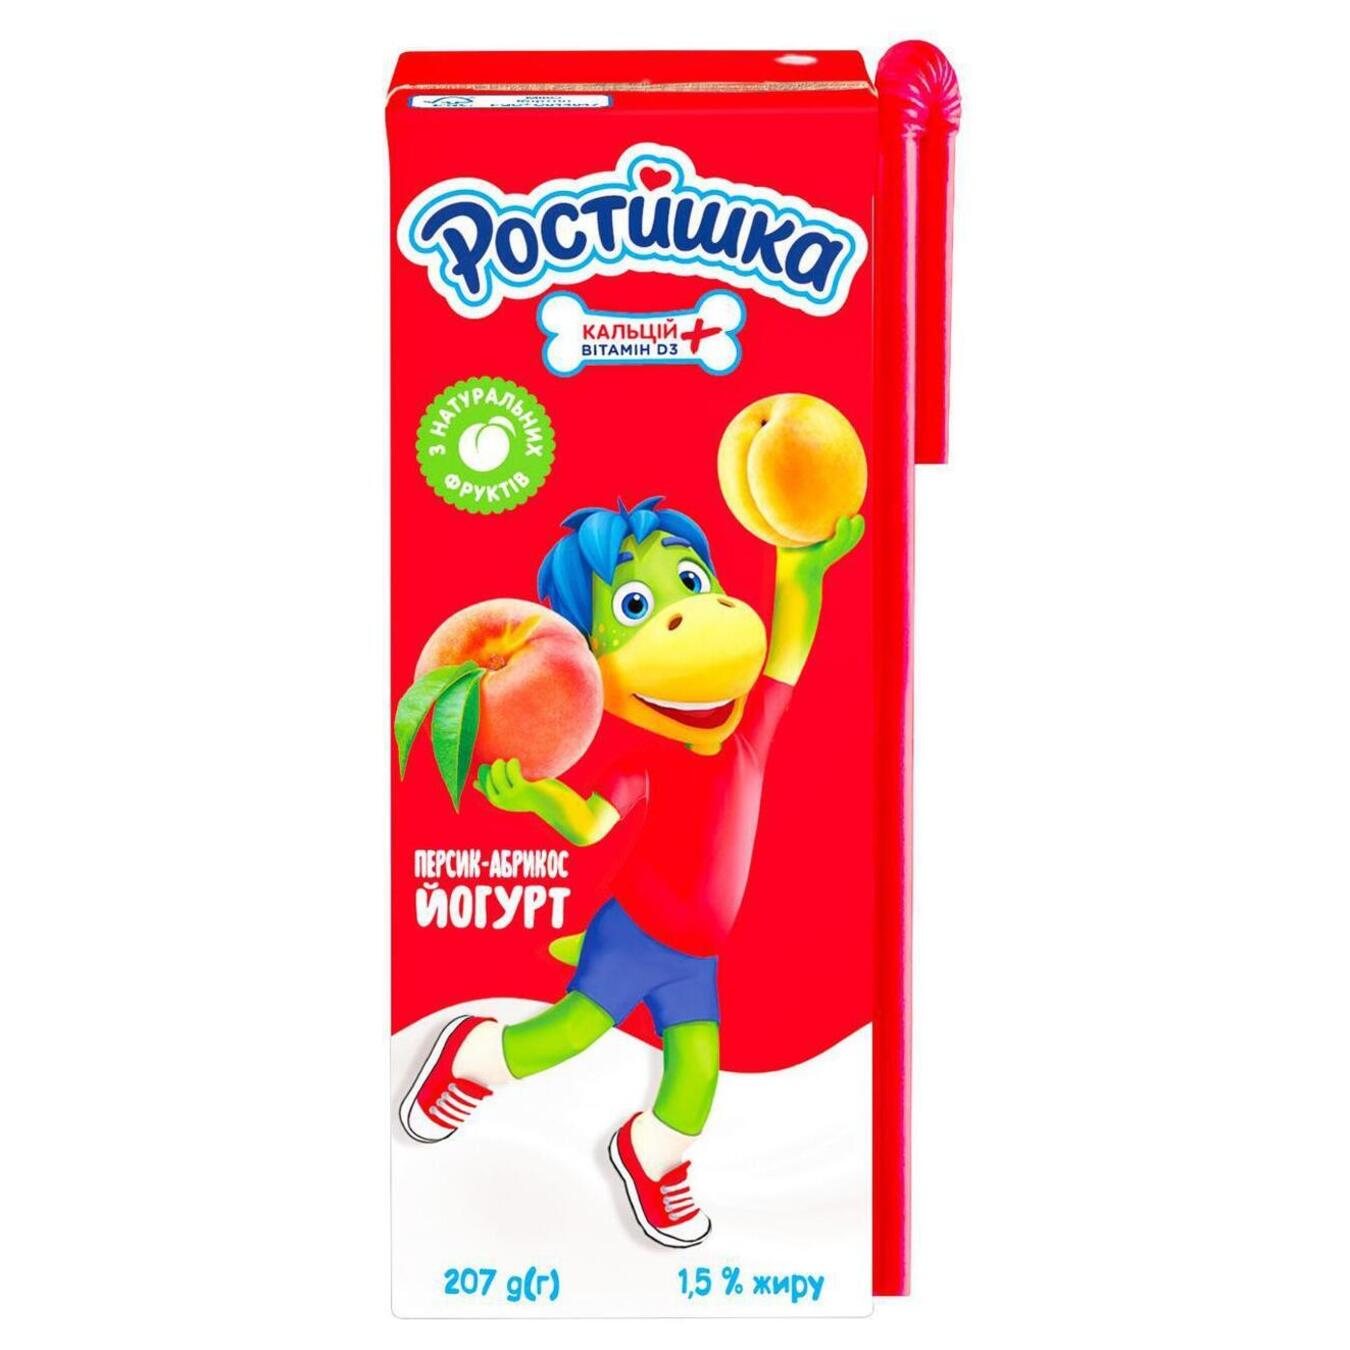 Drinkable yogurt Rostyshka peach-apricot 1.5% 207g